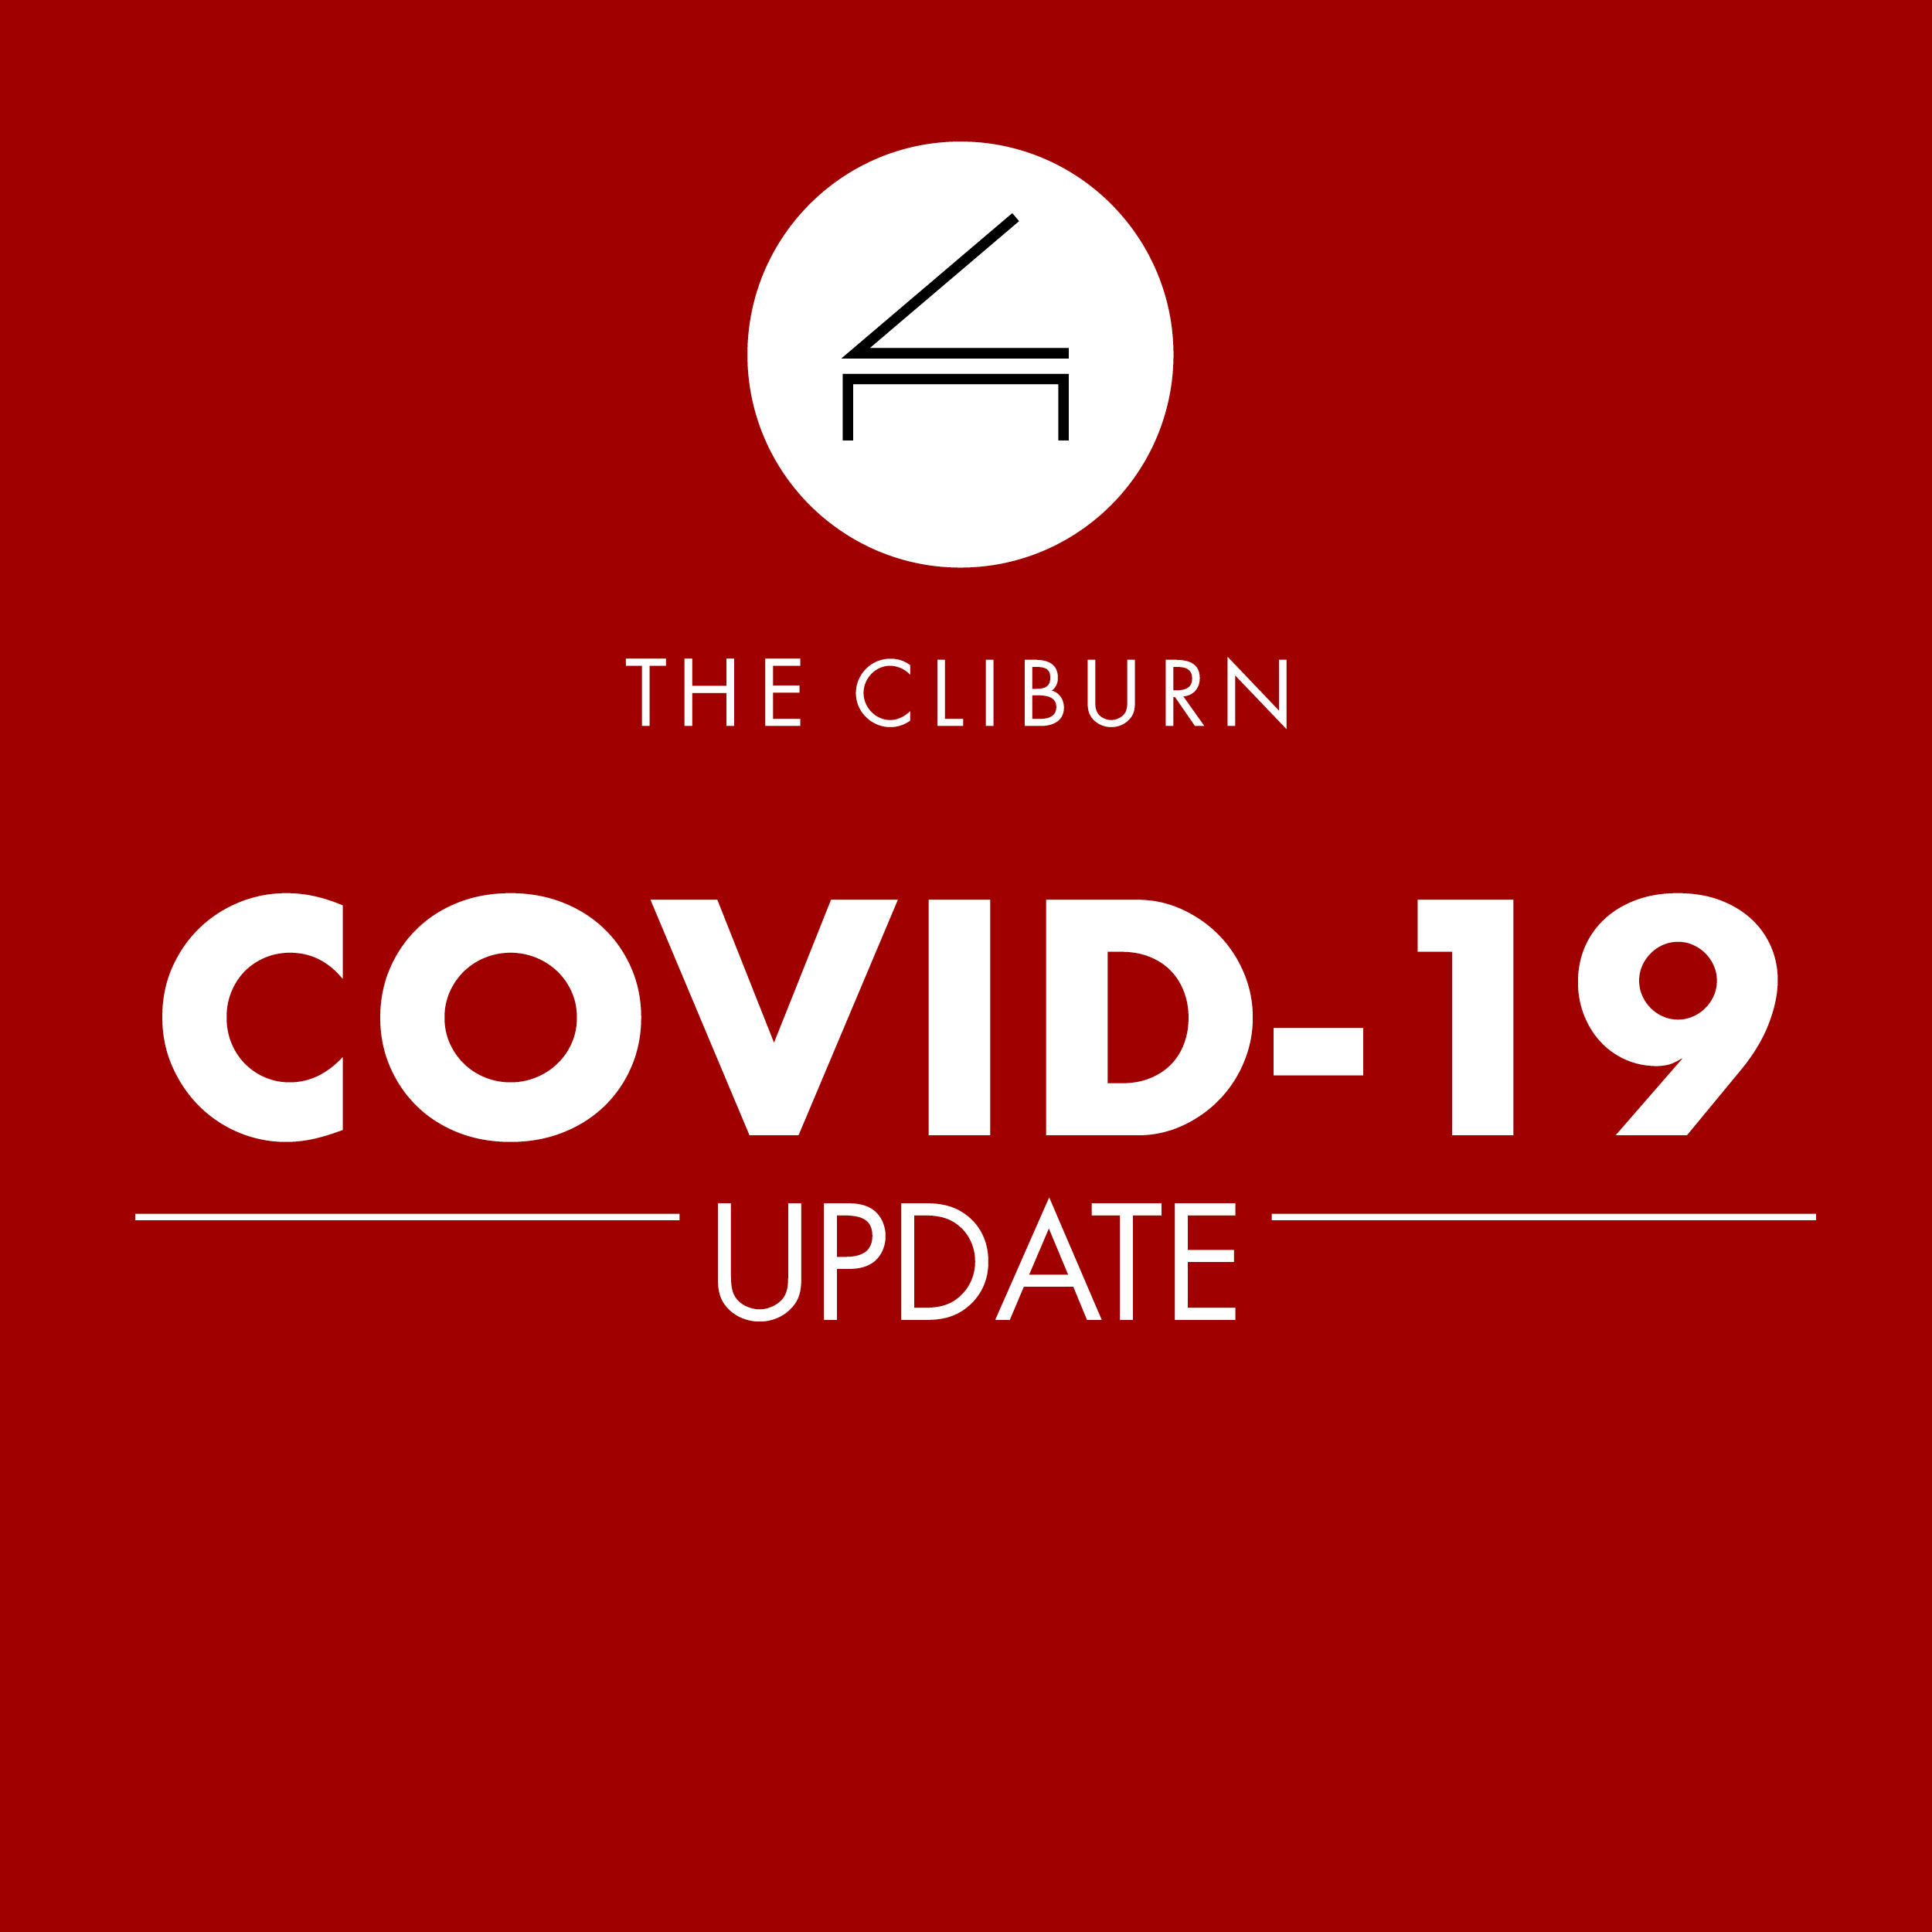 CORONAVIRUS (COVID-19)